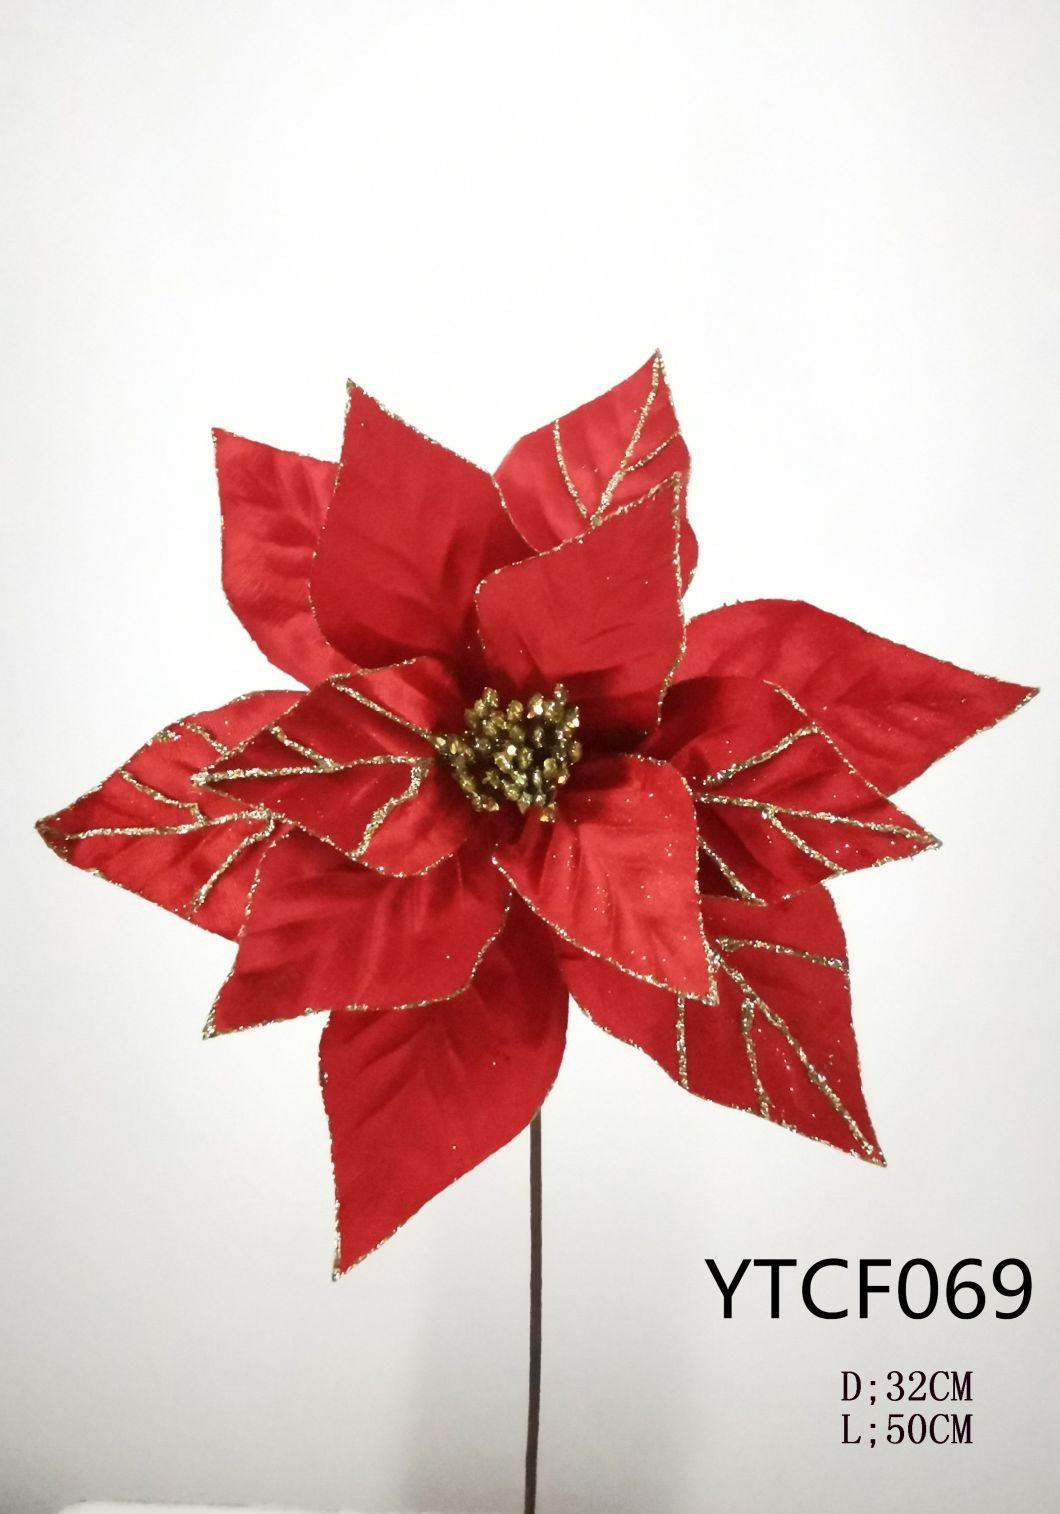 Ytcf070 Hot Sale Artificial Simulation Velvet Xmas Poinsettias Flowers with Stems to Decor Tree